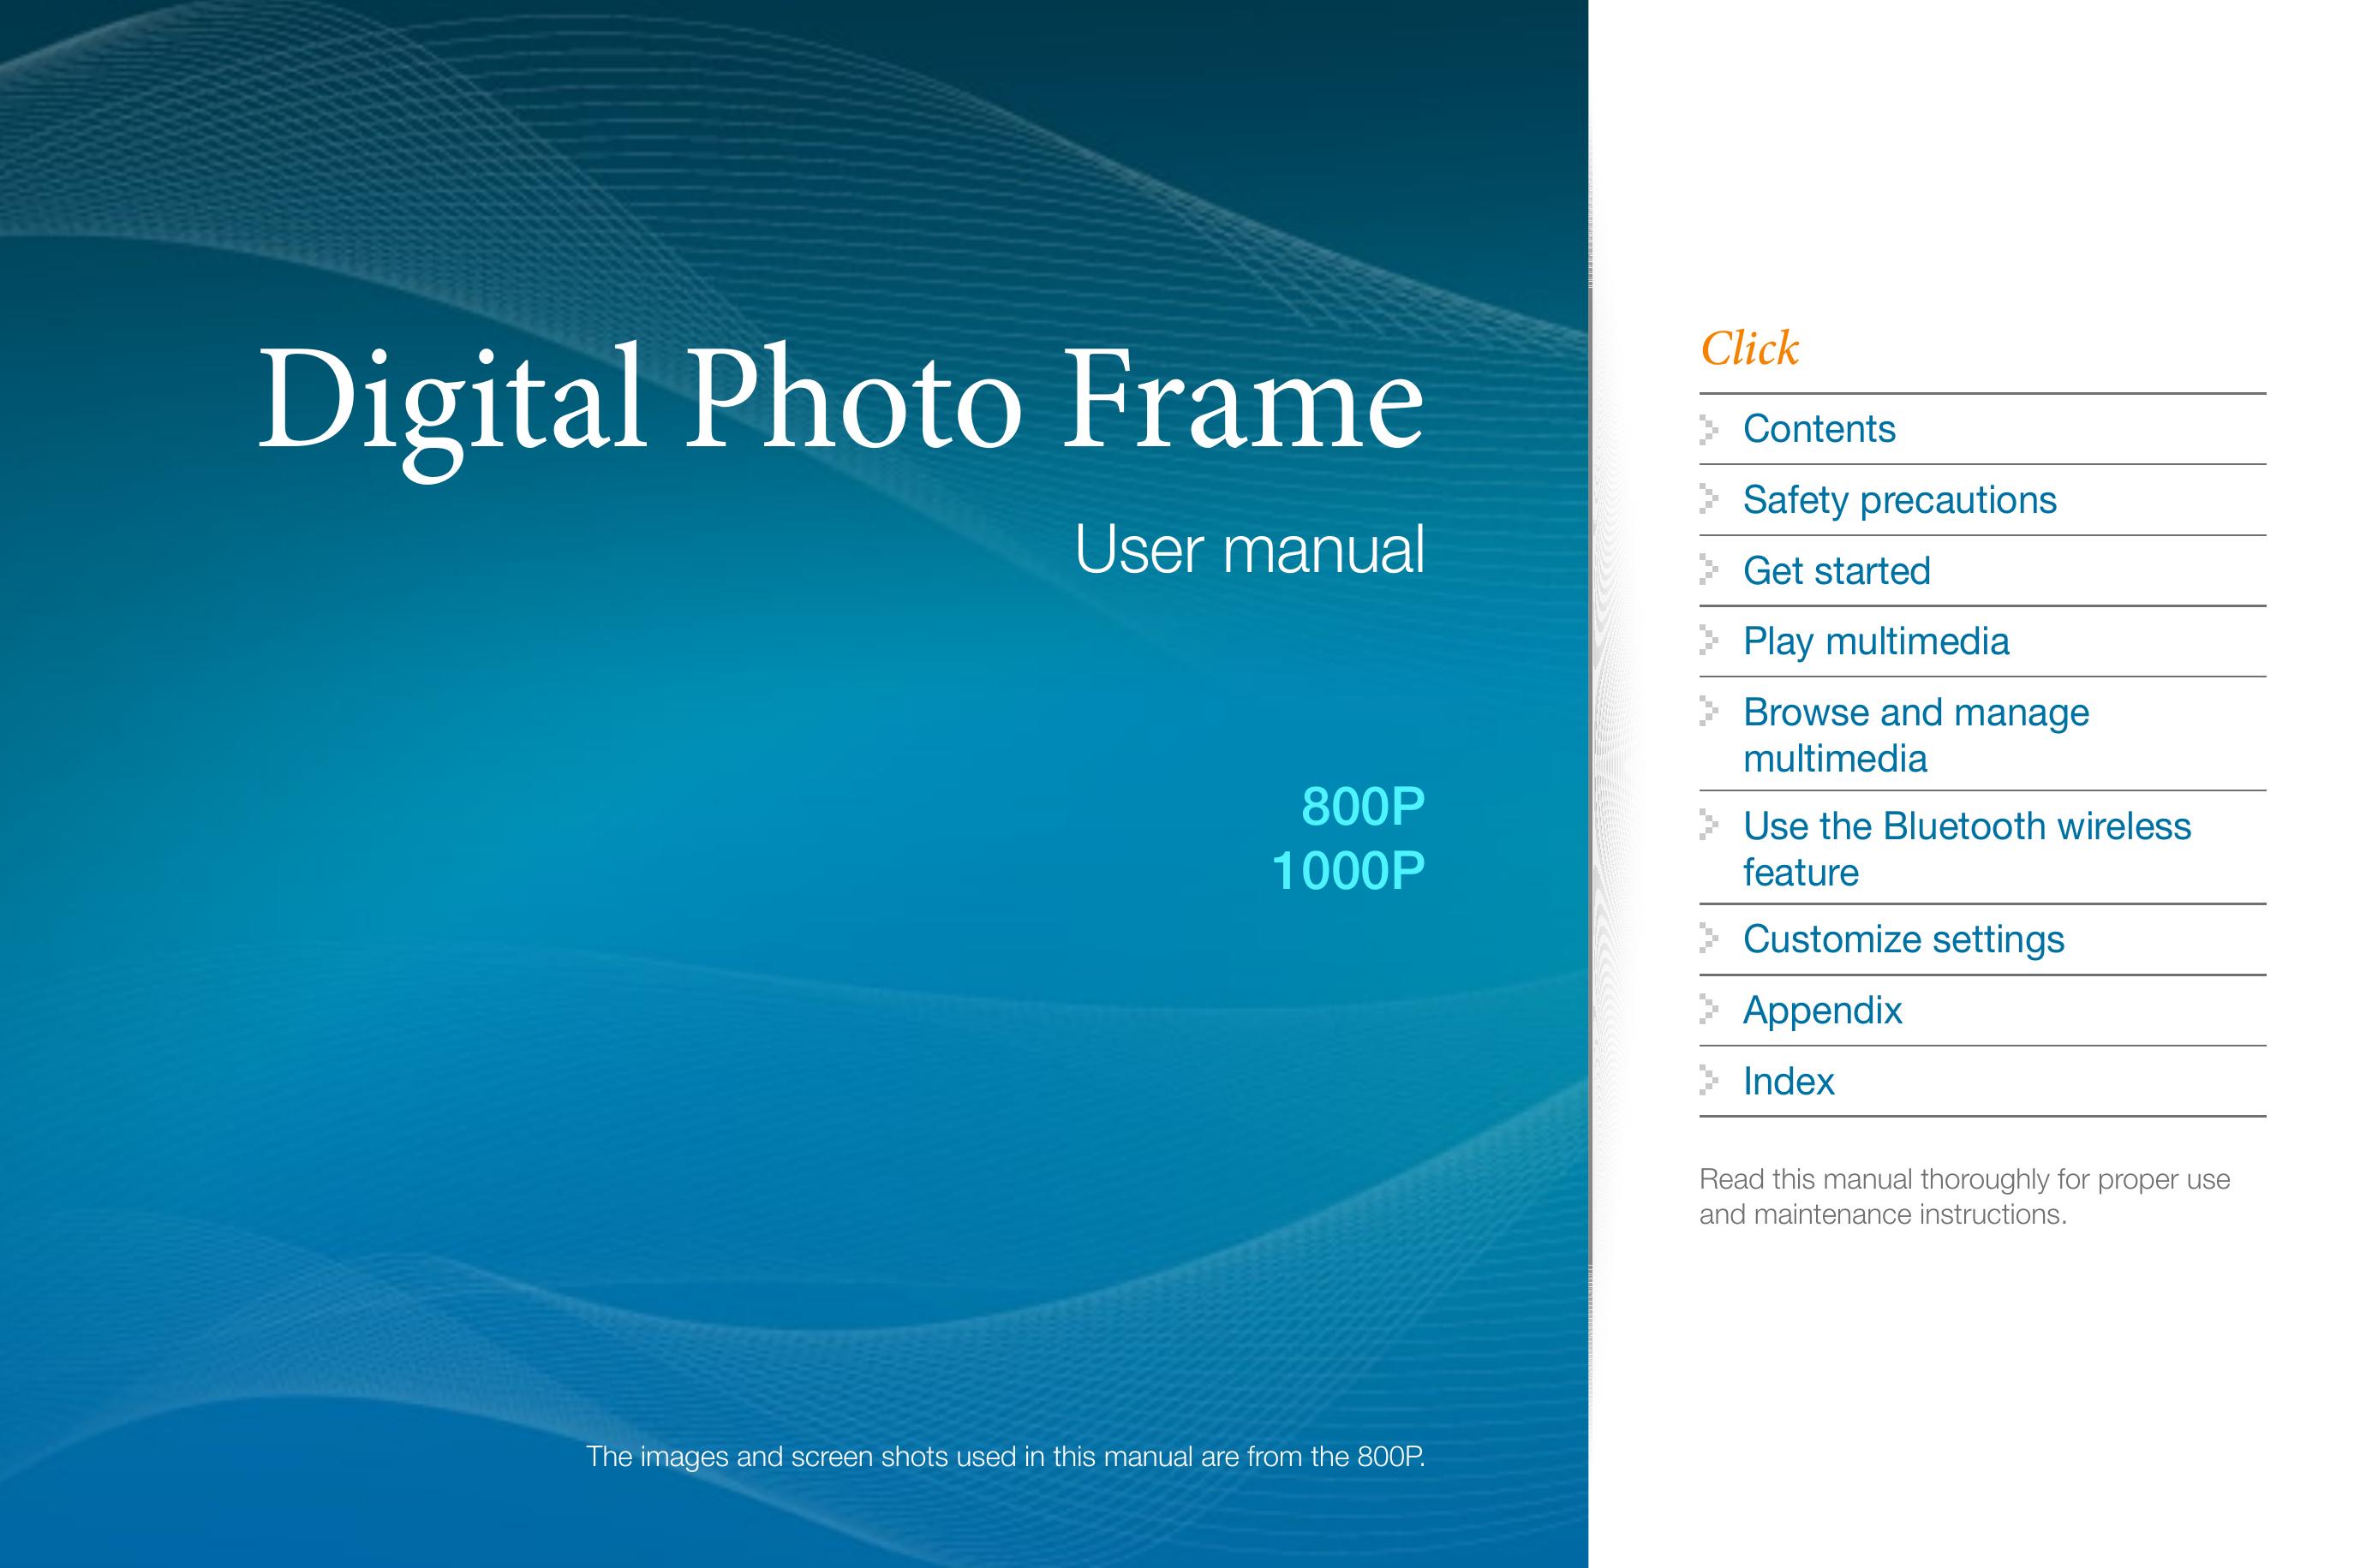 Samsung 1000P Digital Photo Frame User Manual